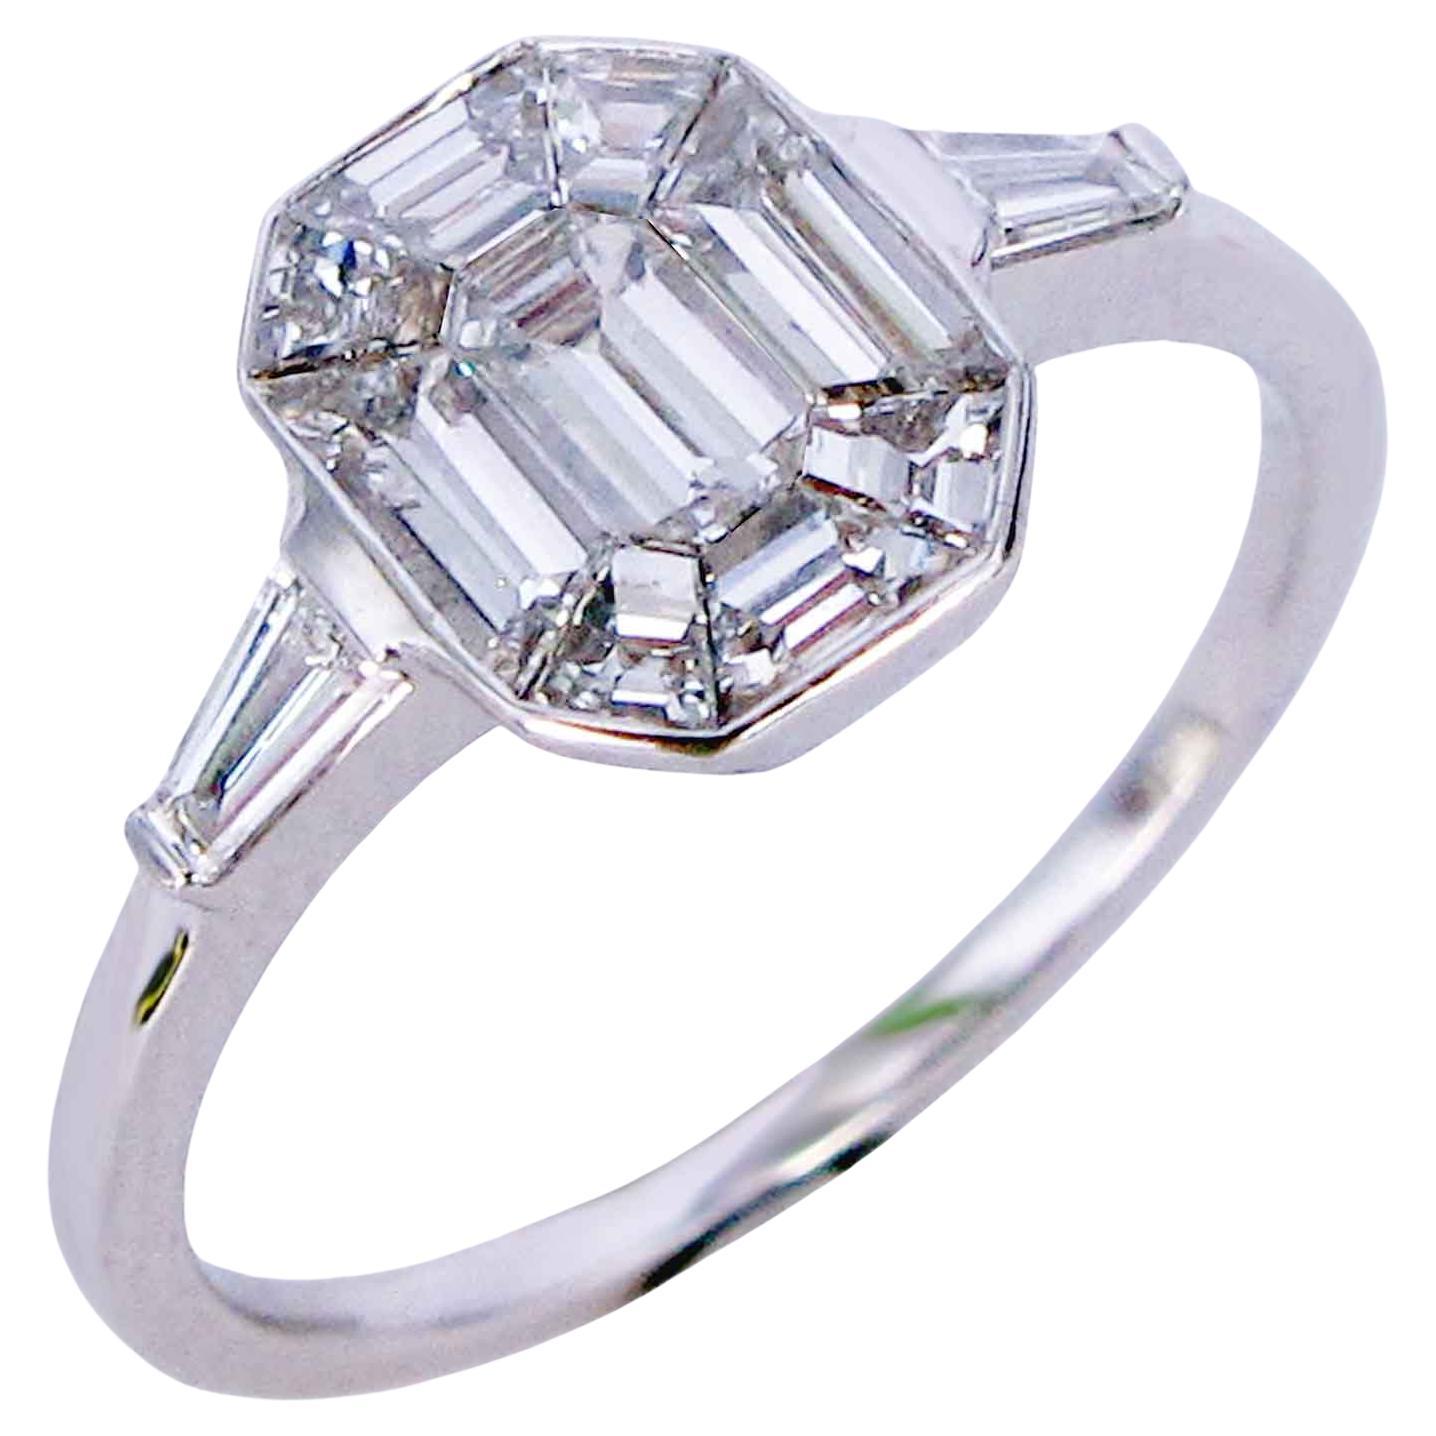 For Sale:  3 Carat face up Emerald shape Piecut diamond ring